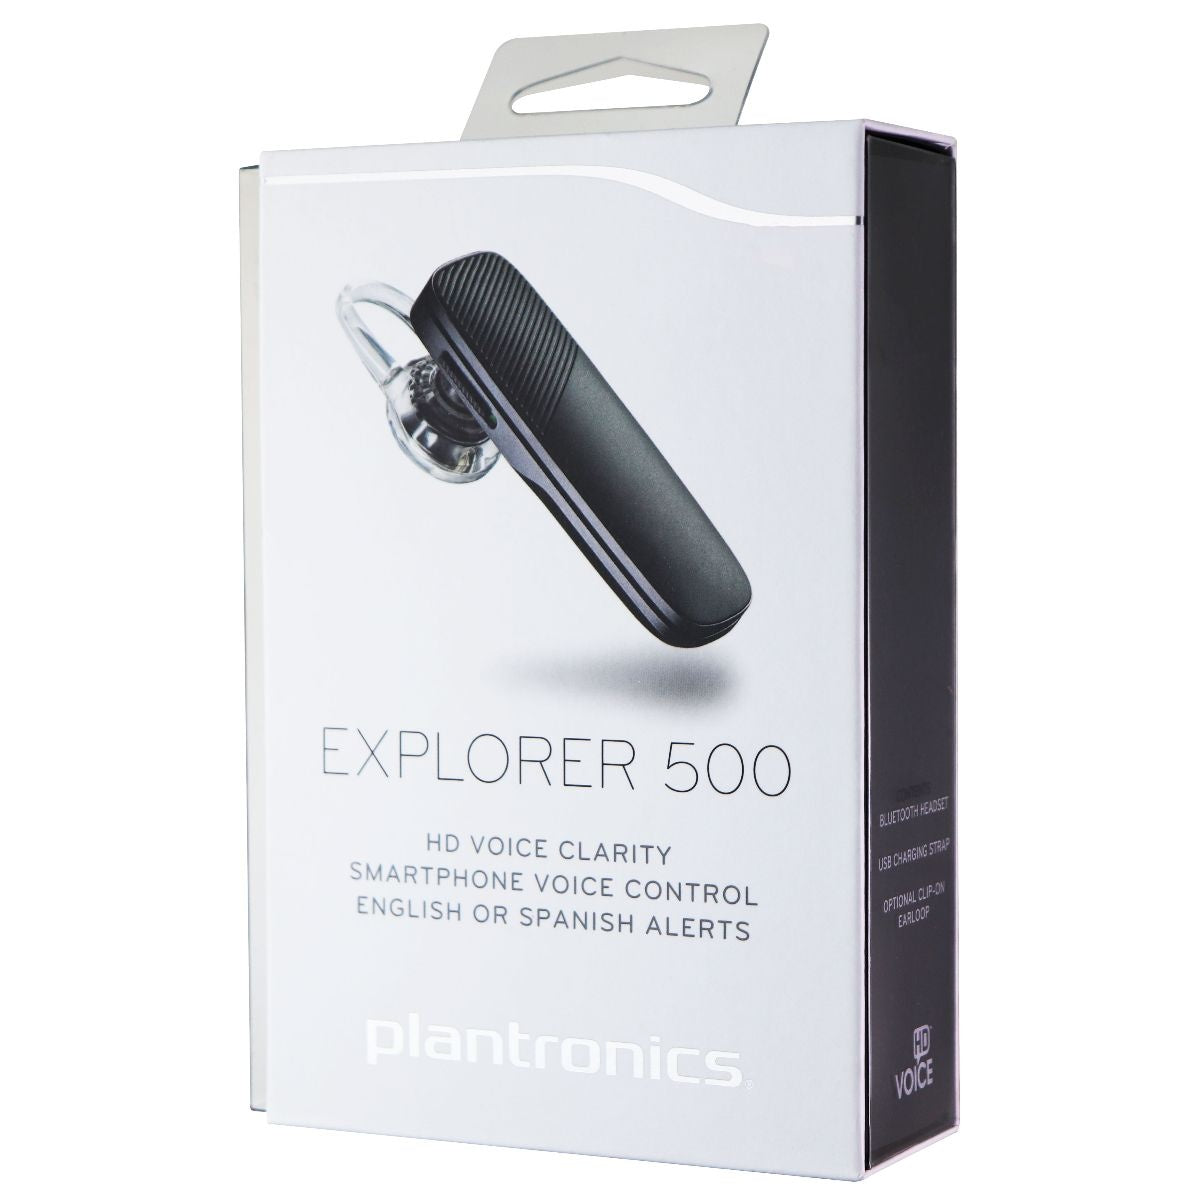 Plantronics Explorer 500 Single Ear Bluetooth Earpiece with HD